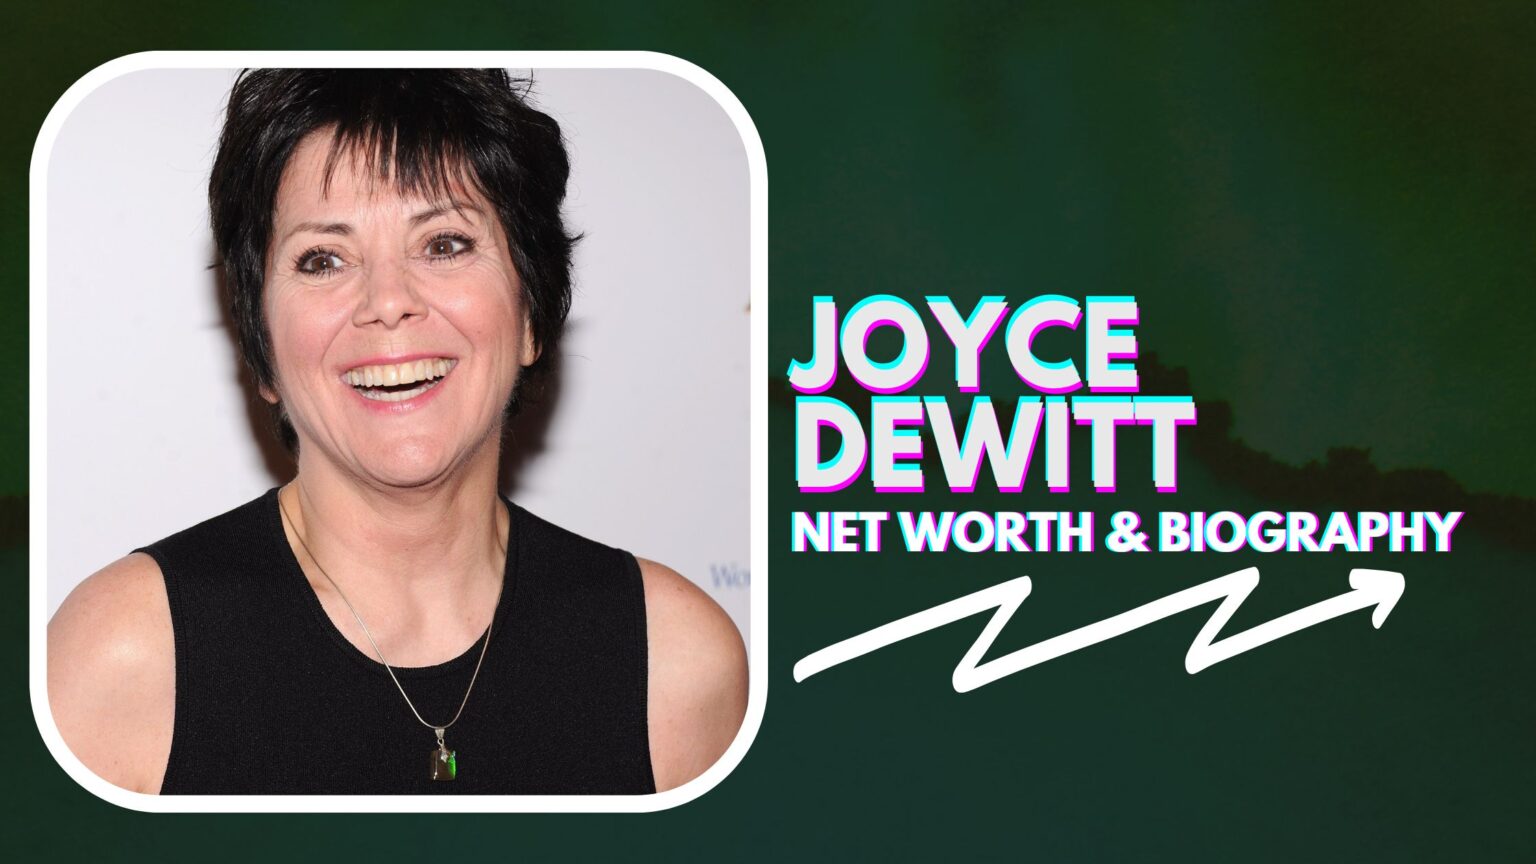 Joyce DeWitt Biography, Net Worth and Career